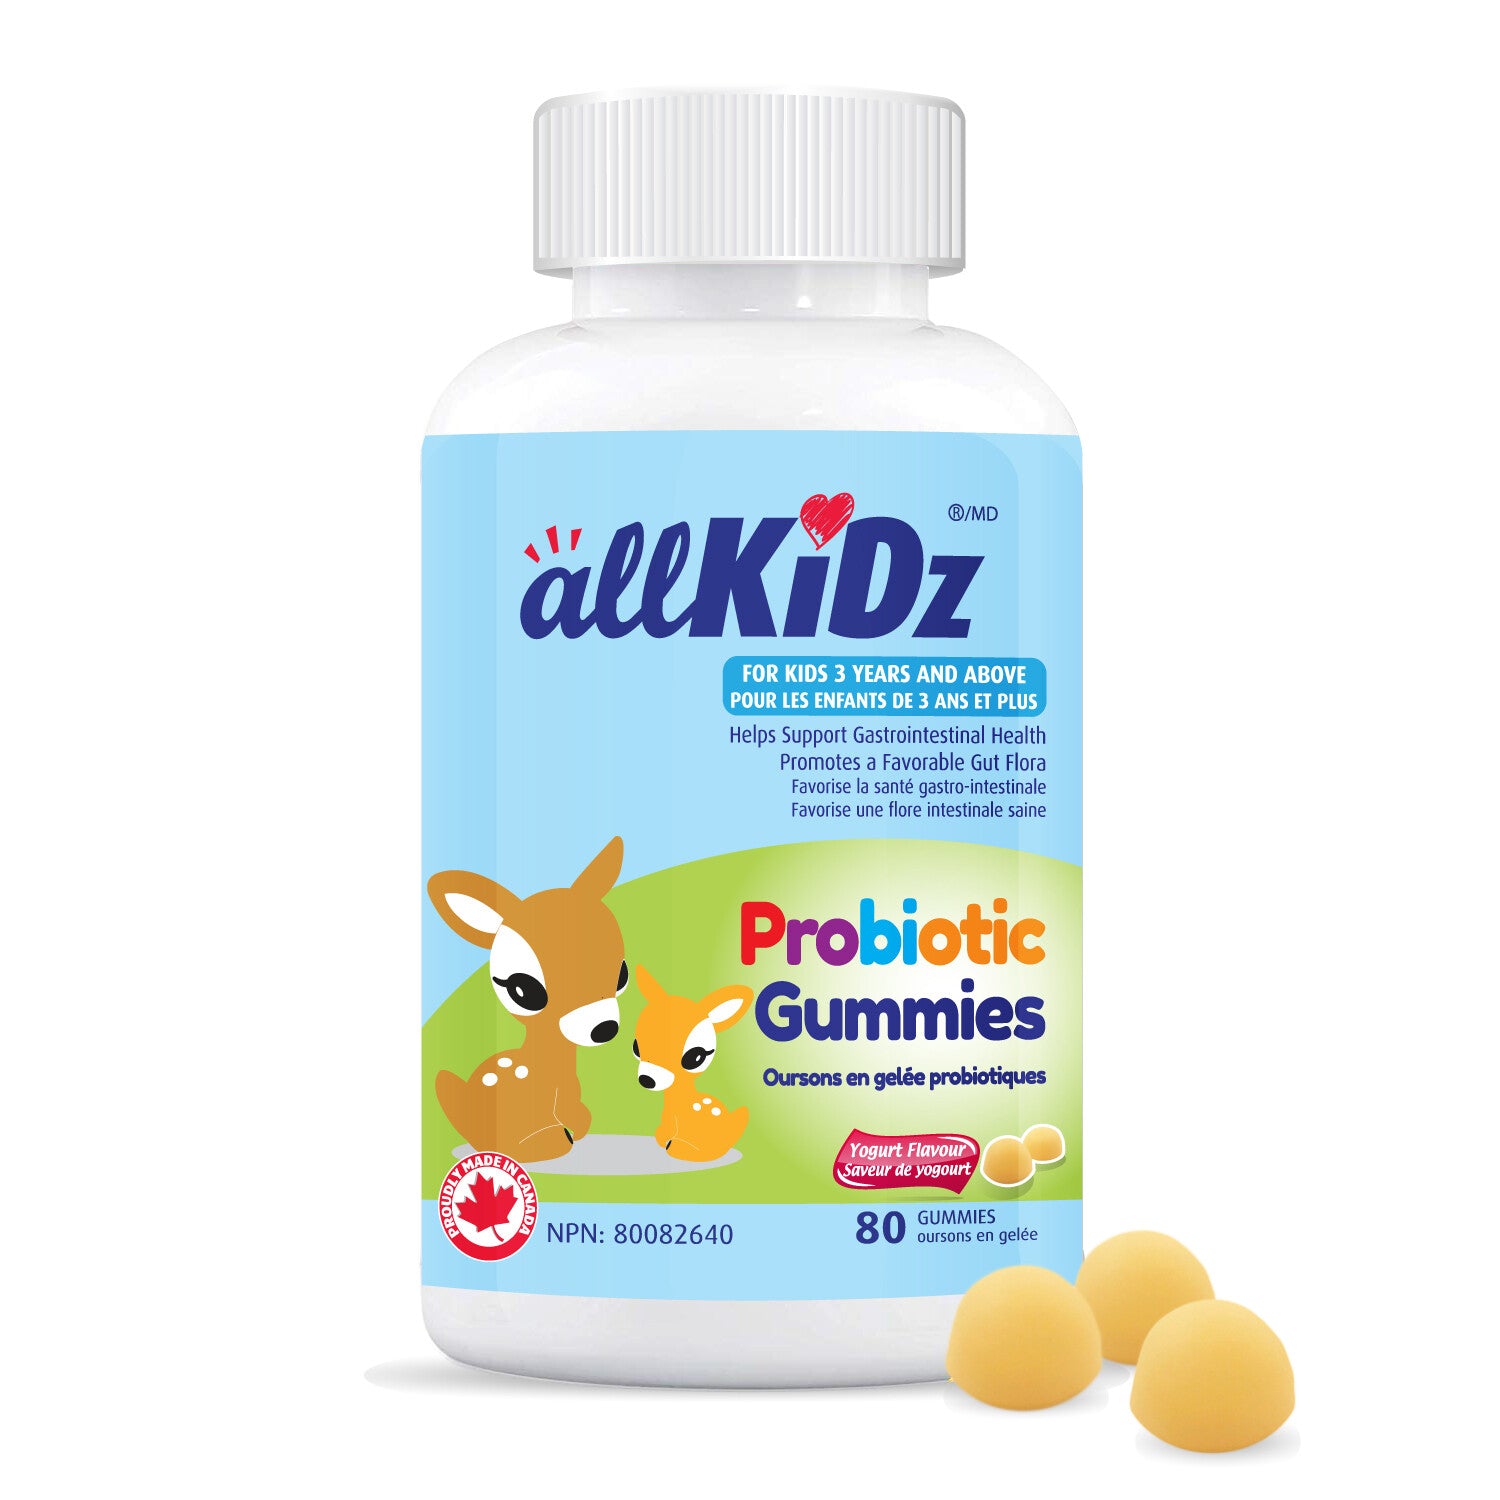 AllKidz Probiotic Gummies 80 Gummies